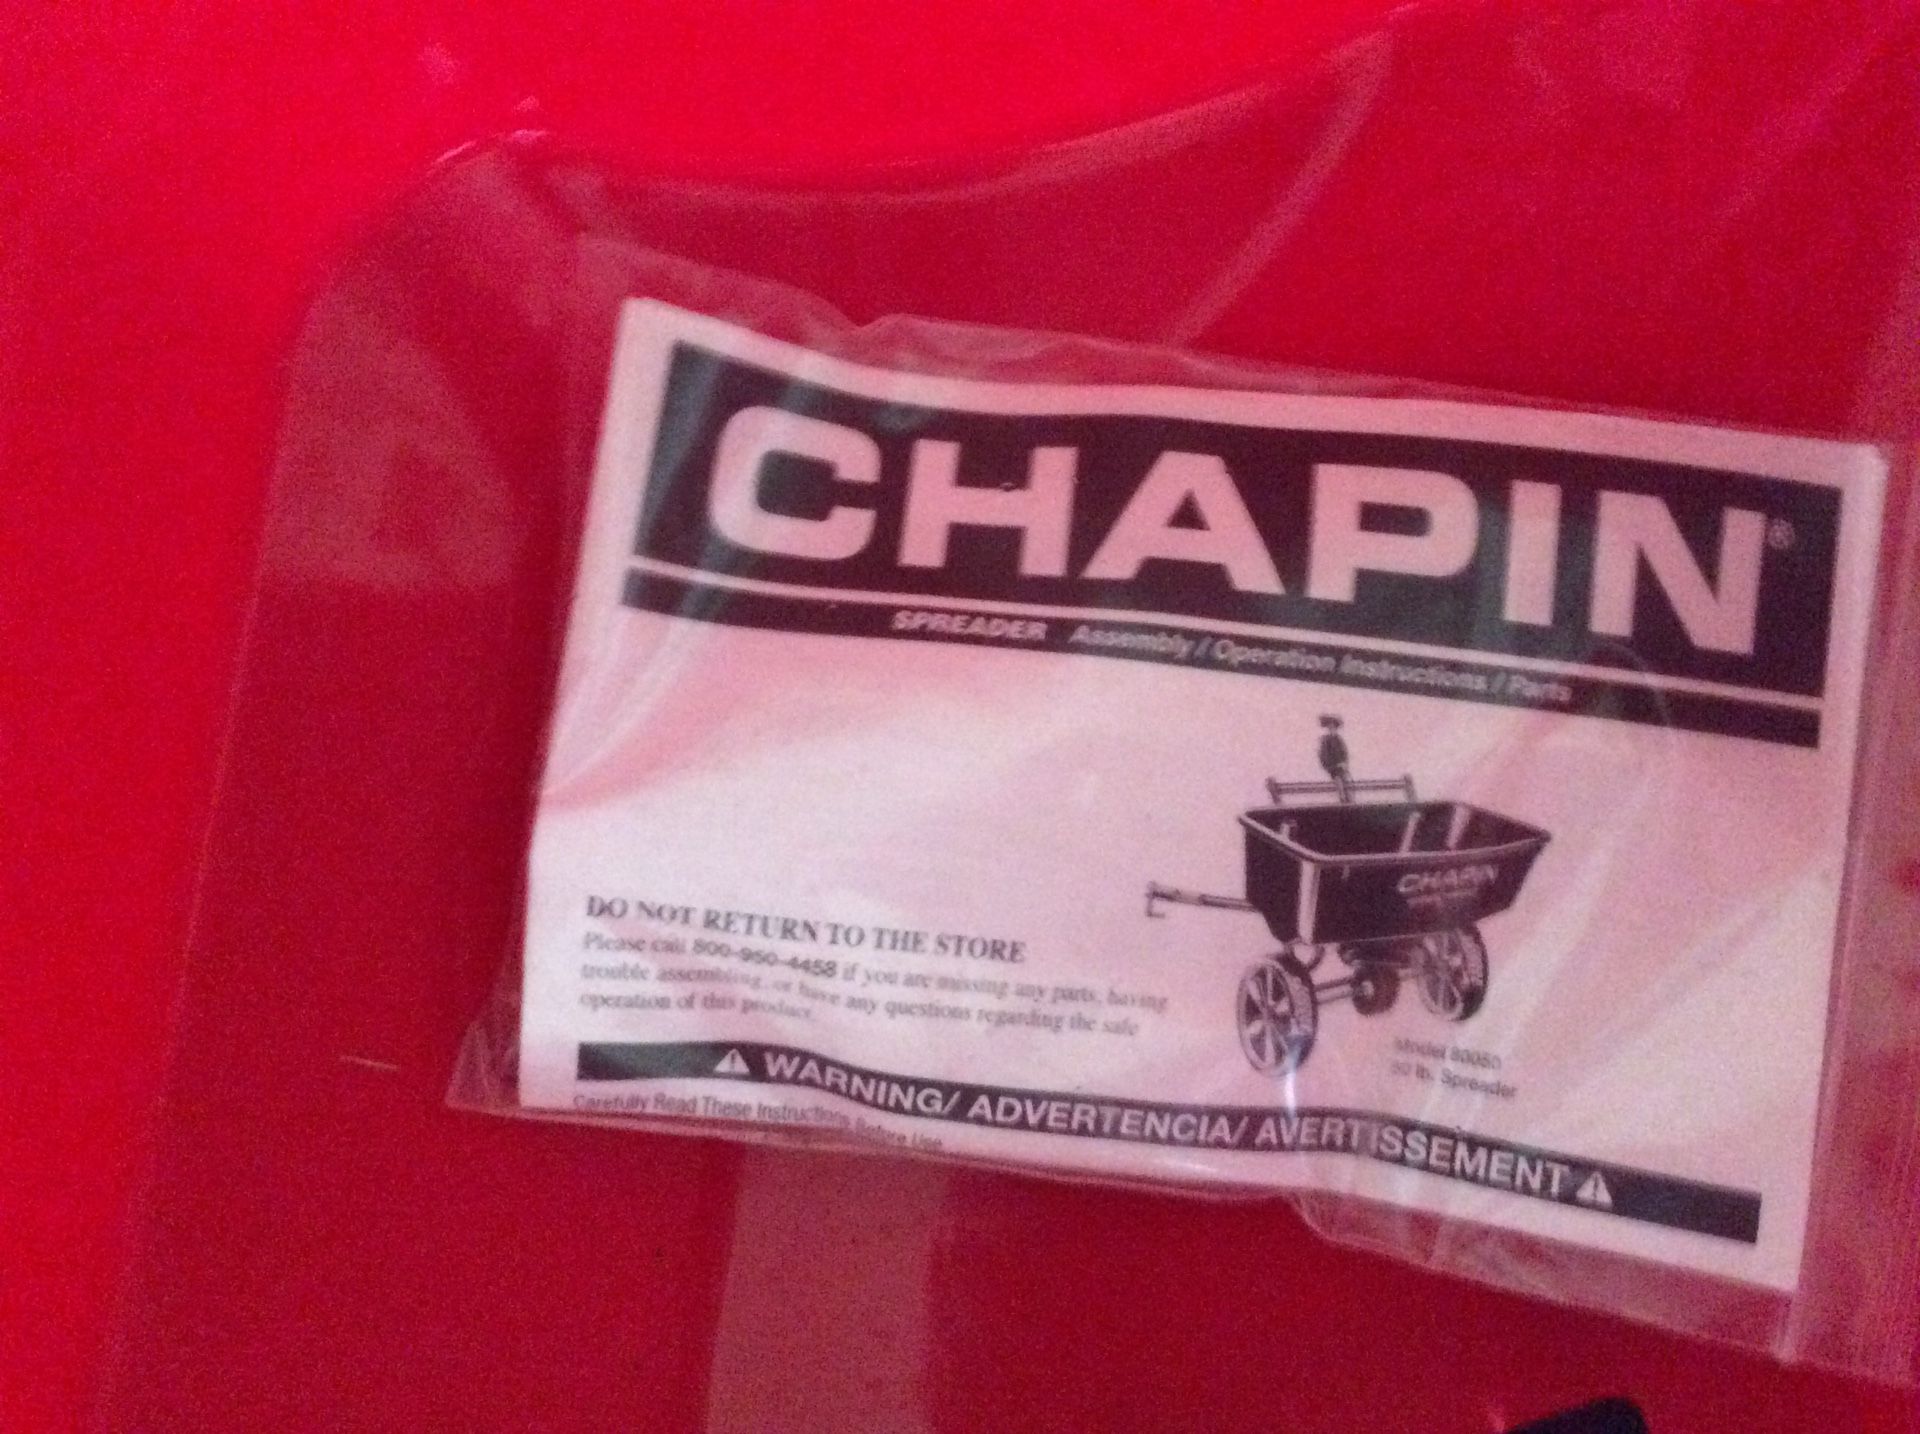 Chapin spreader